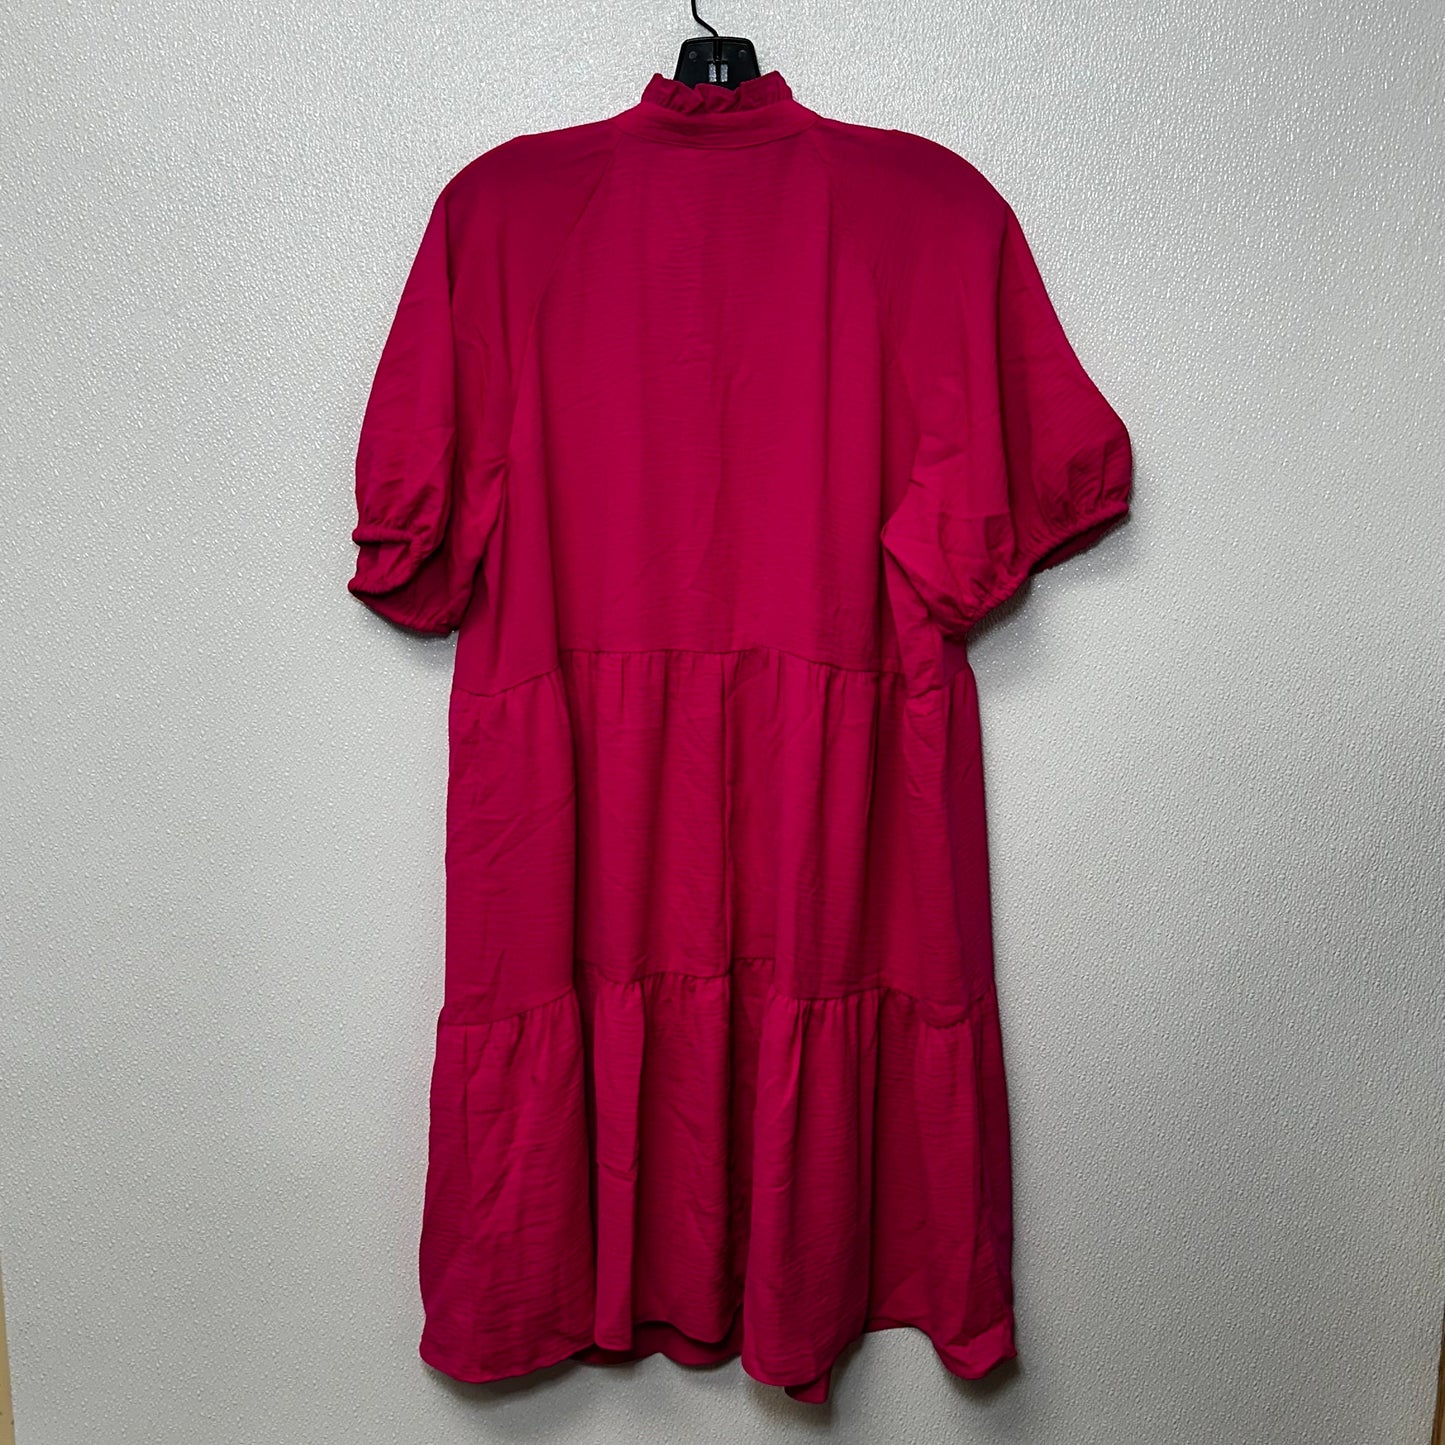 Hot Pink Dress Casual Short Cece, Size 1x